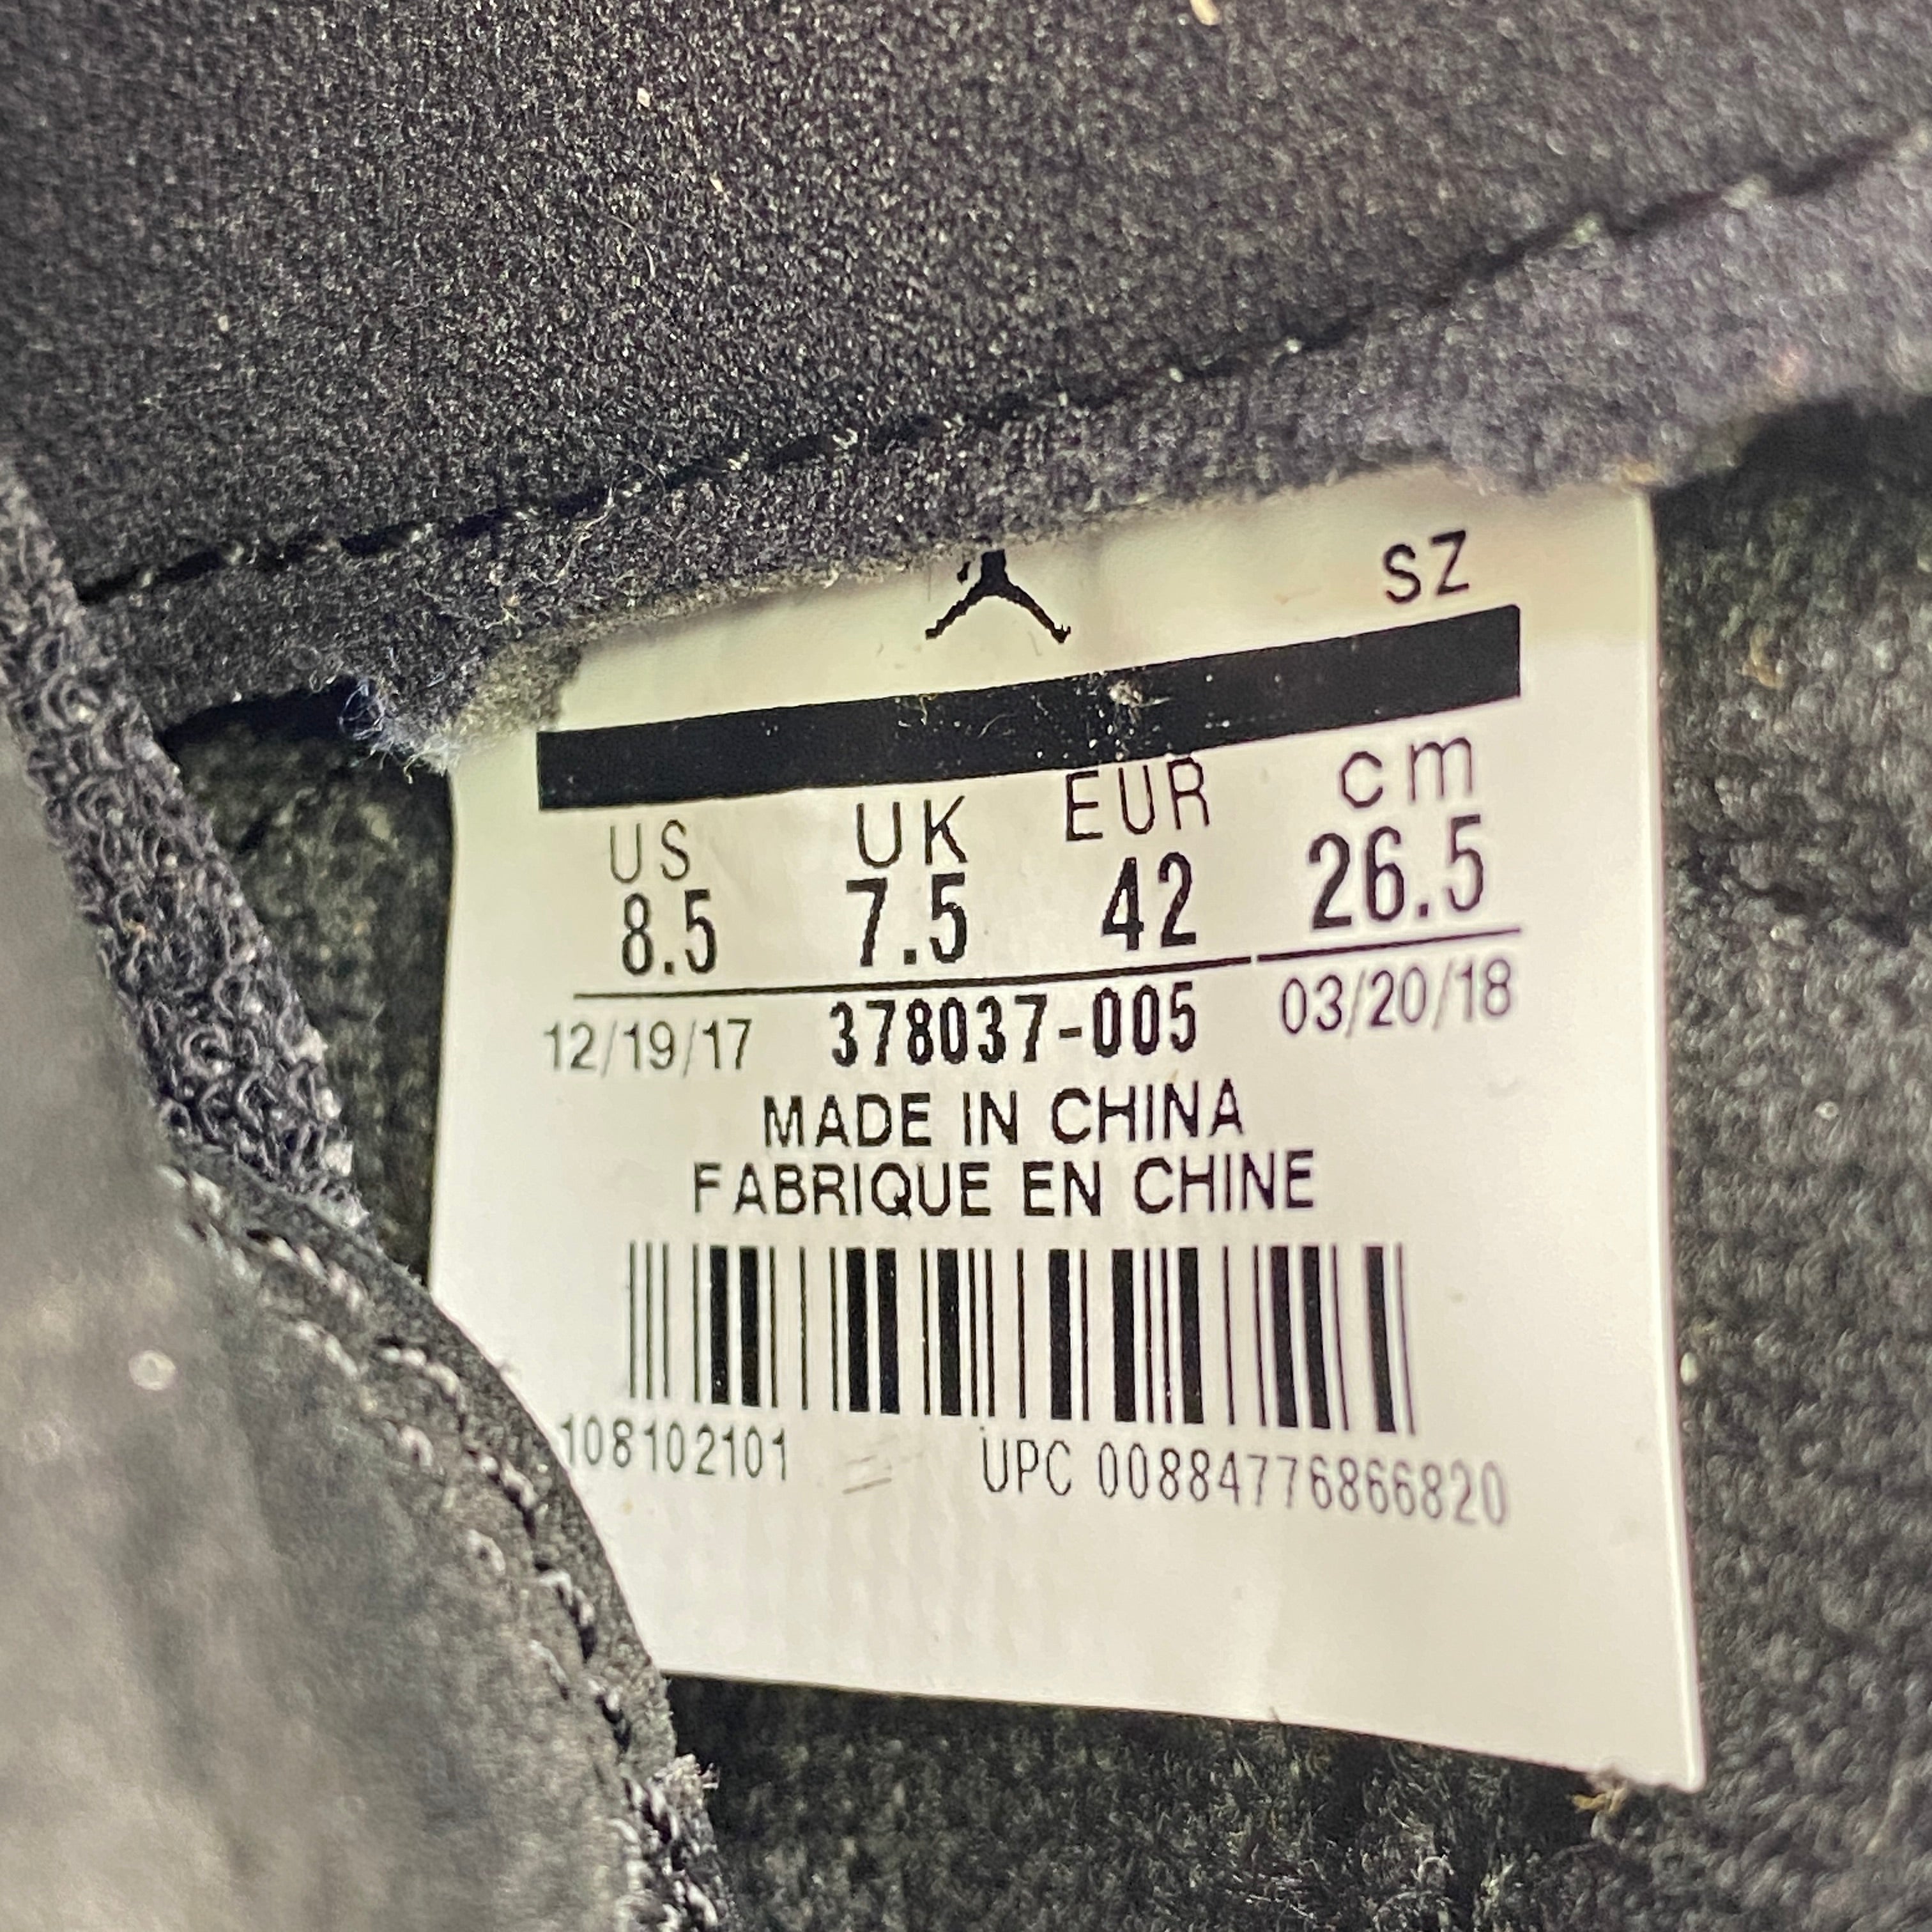 Air Jordan 11 Retro "Cap & Gown" 2018 Used Size 8.5